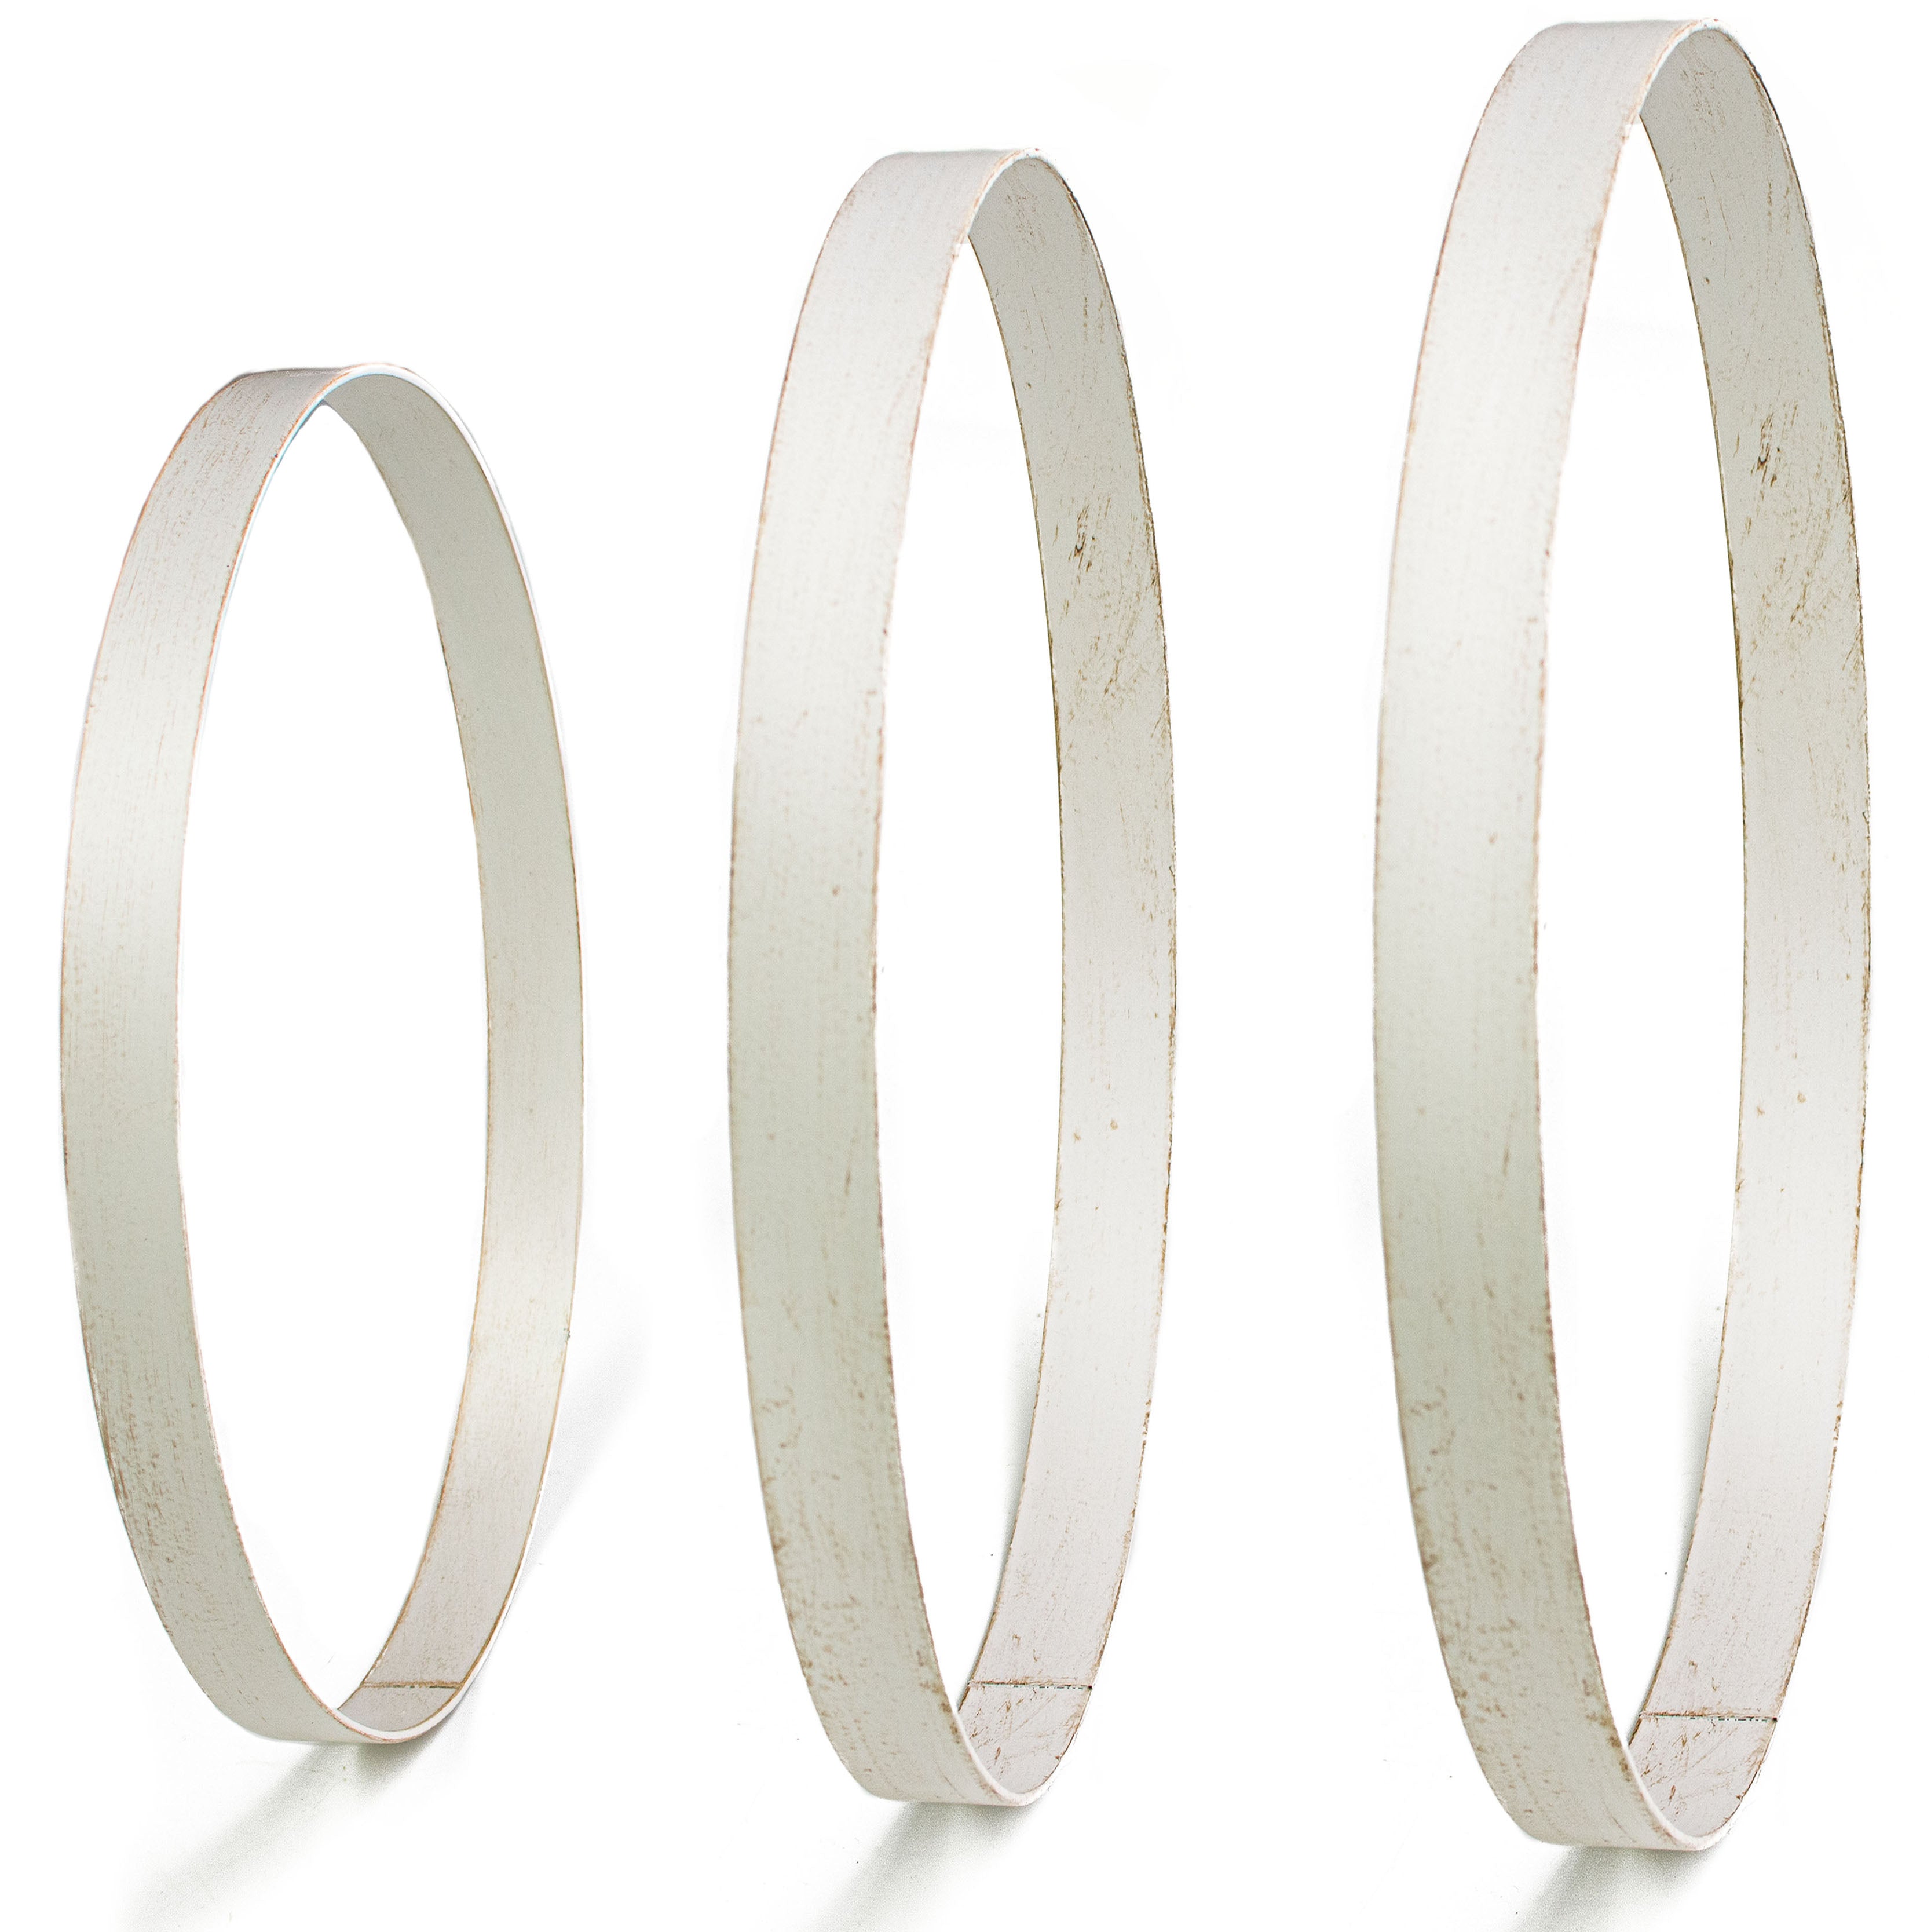 15.75-17.75" Metal Wreath Ring: Antique White (Set of 3)